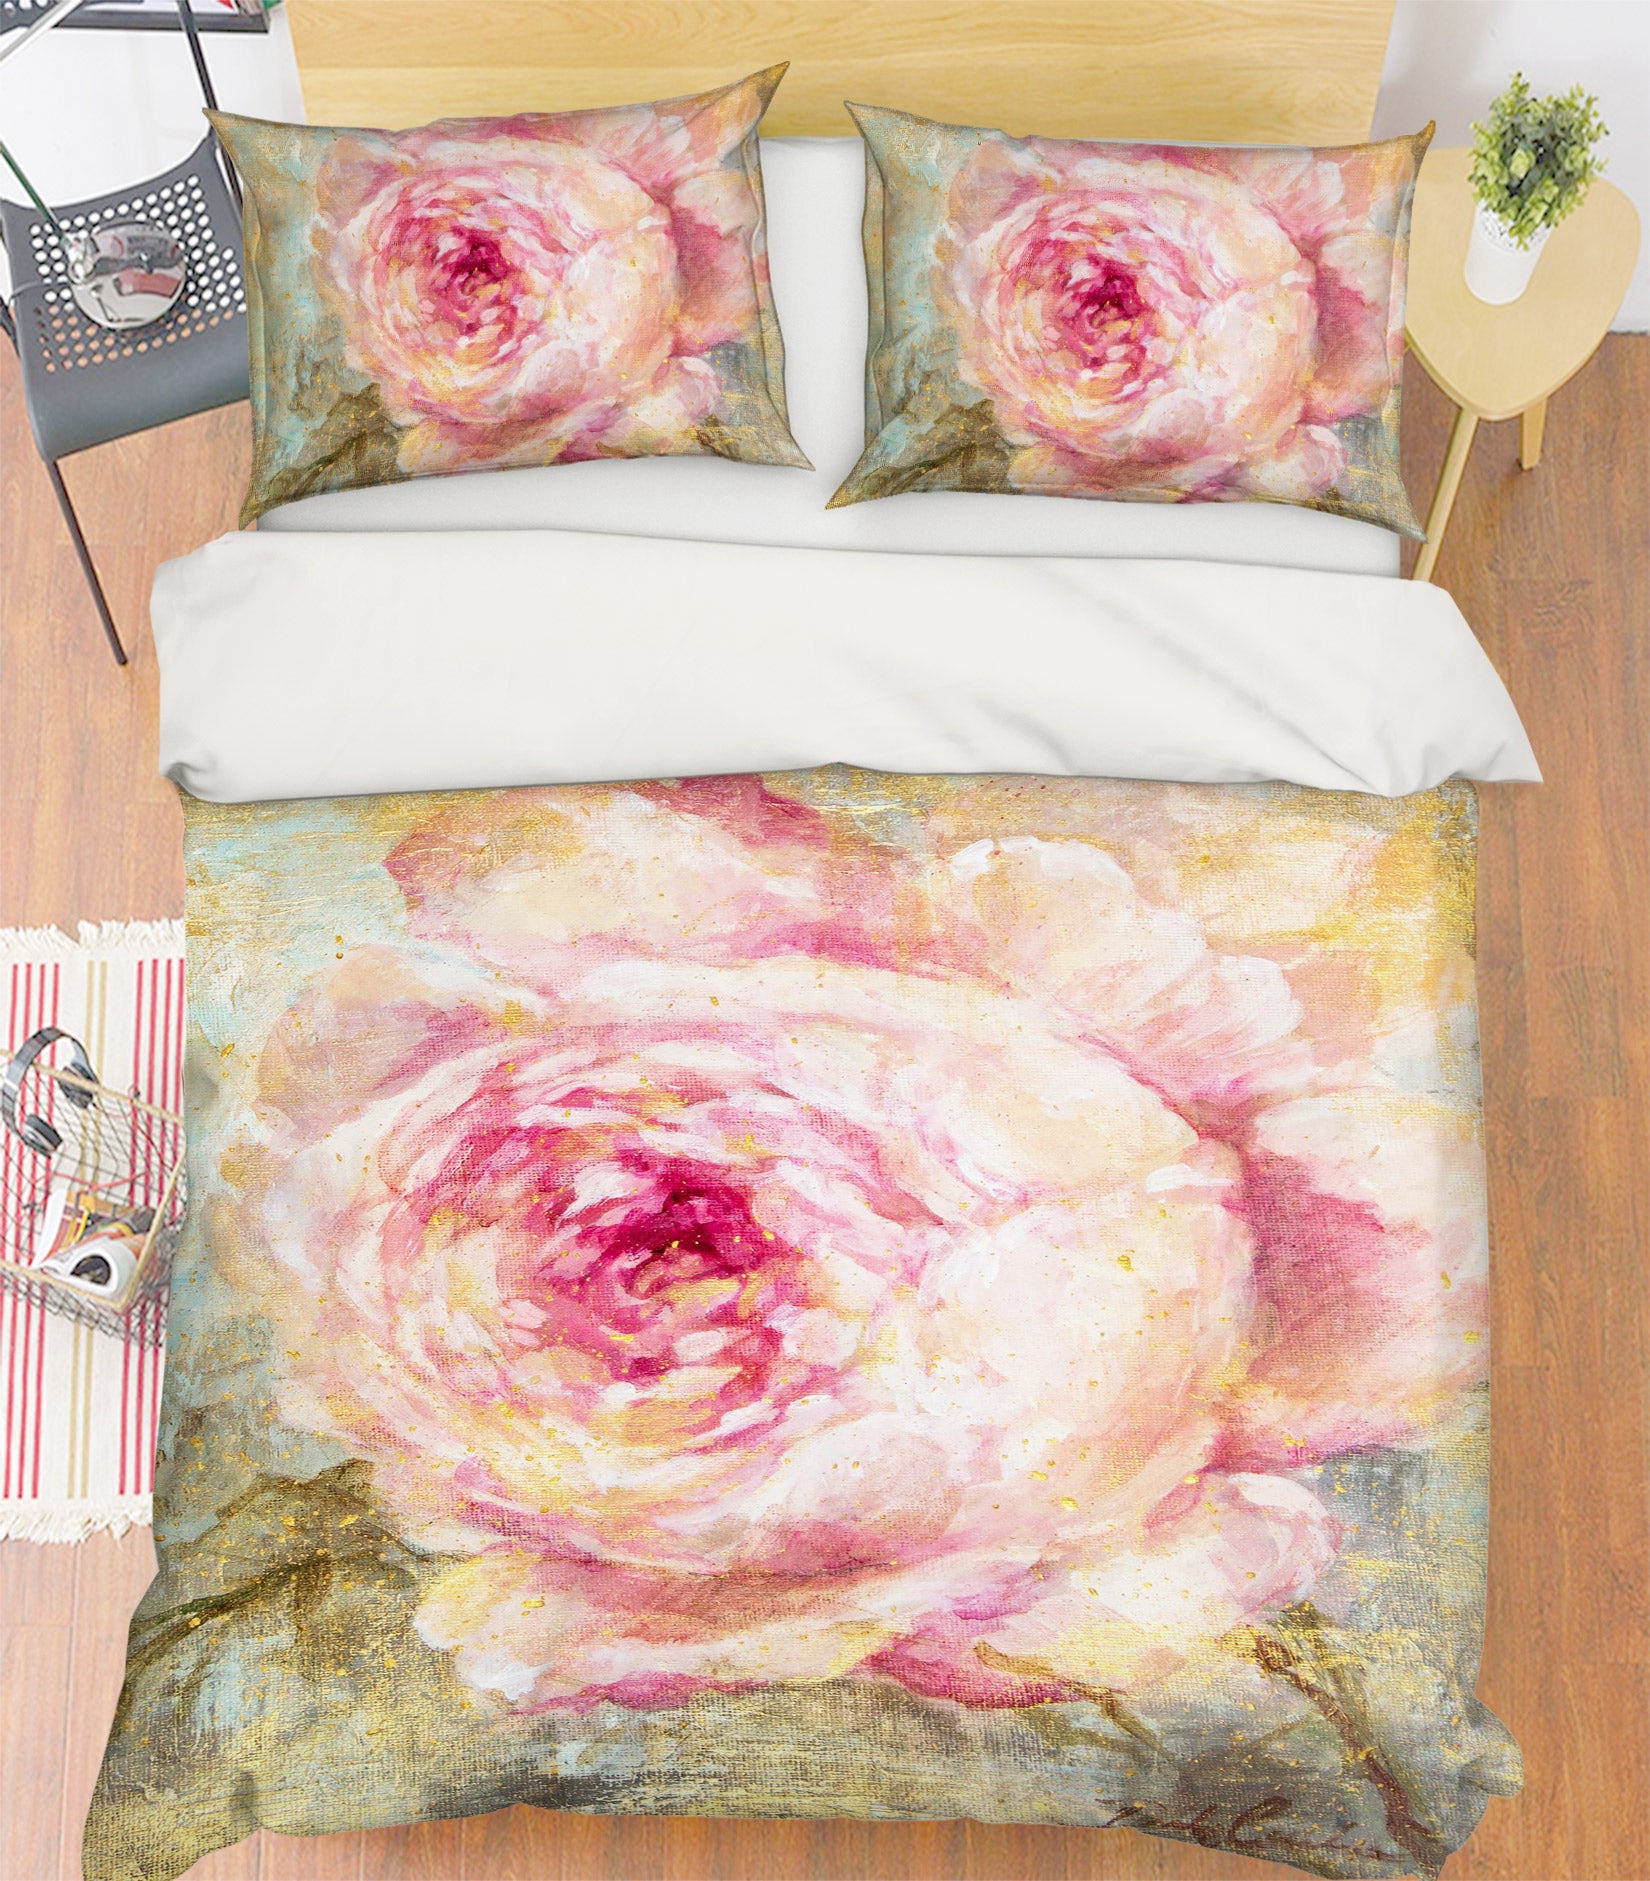 3D Flower Rose 2135 Debi Coules Bedding Bed Pillowcases Quilt